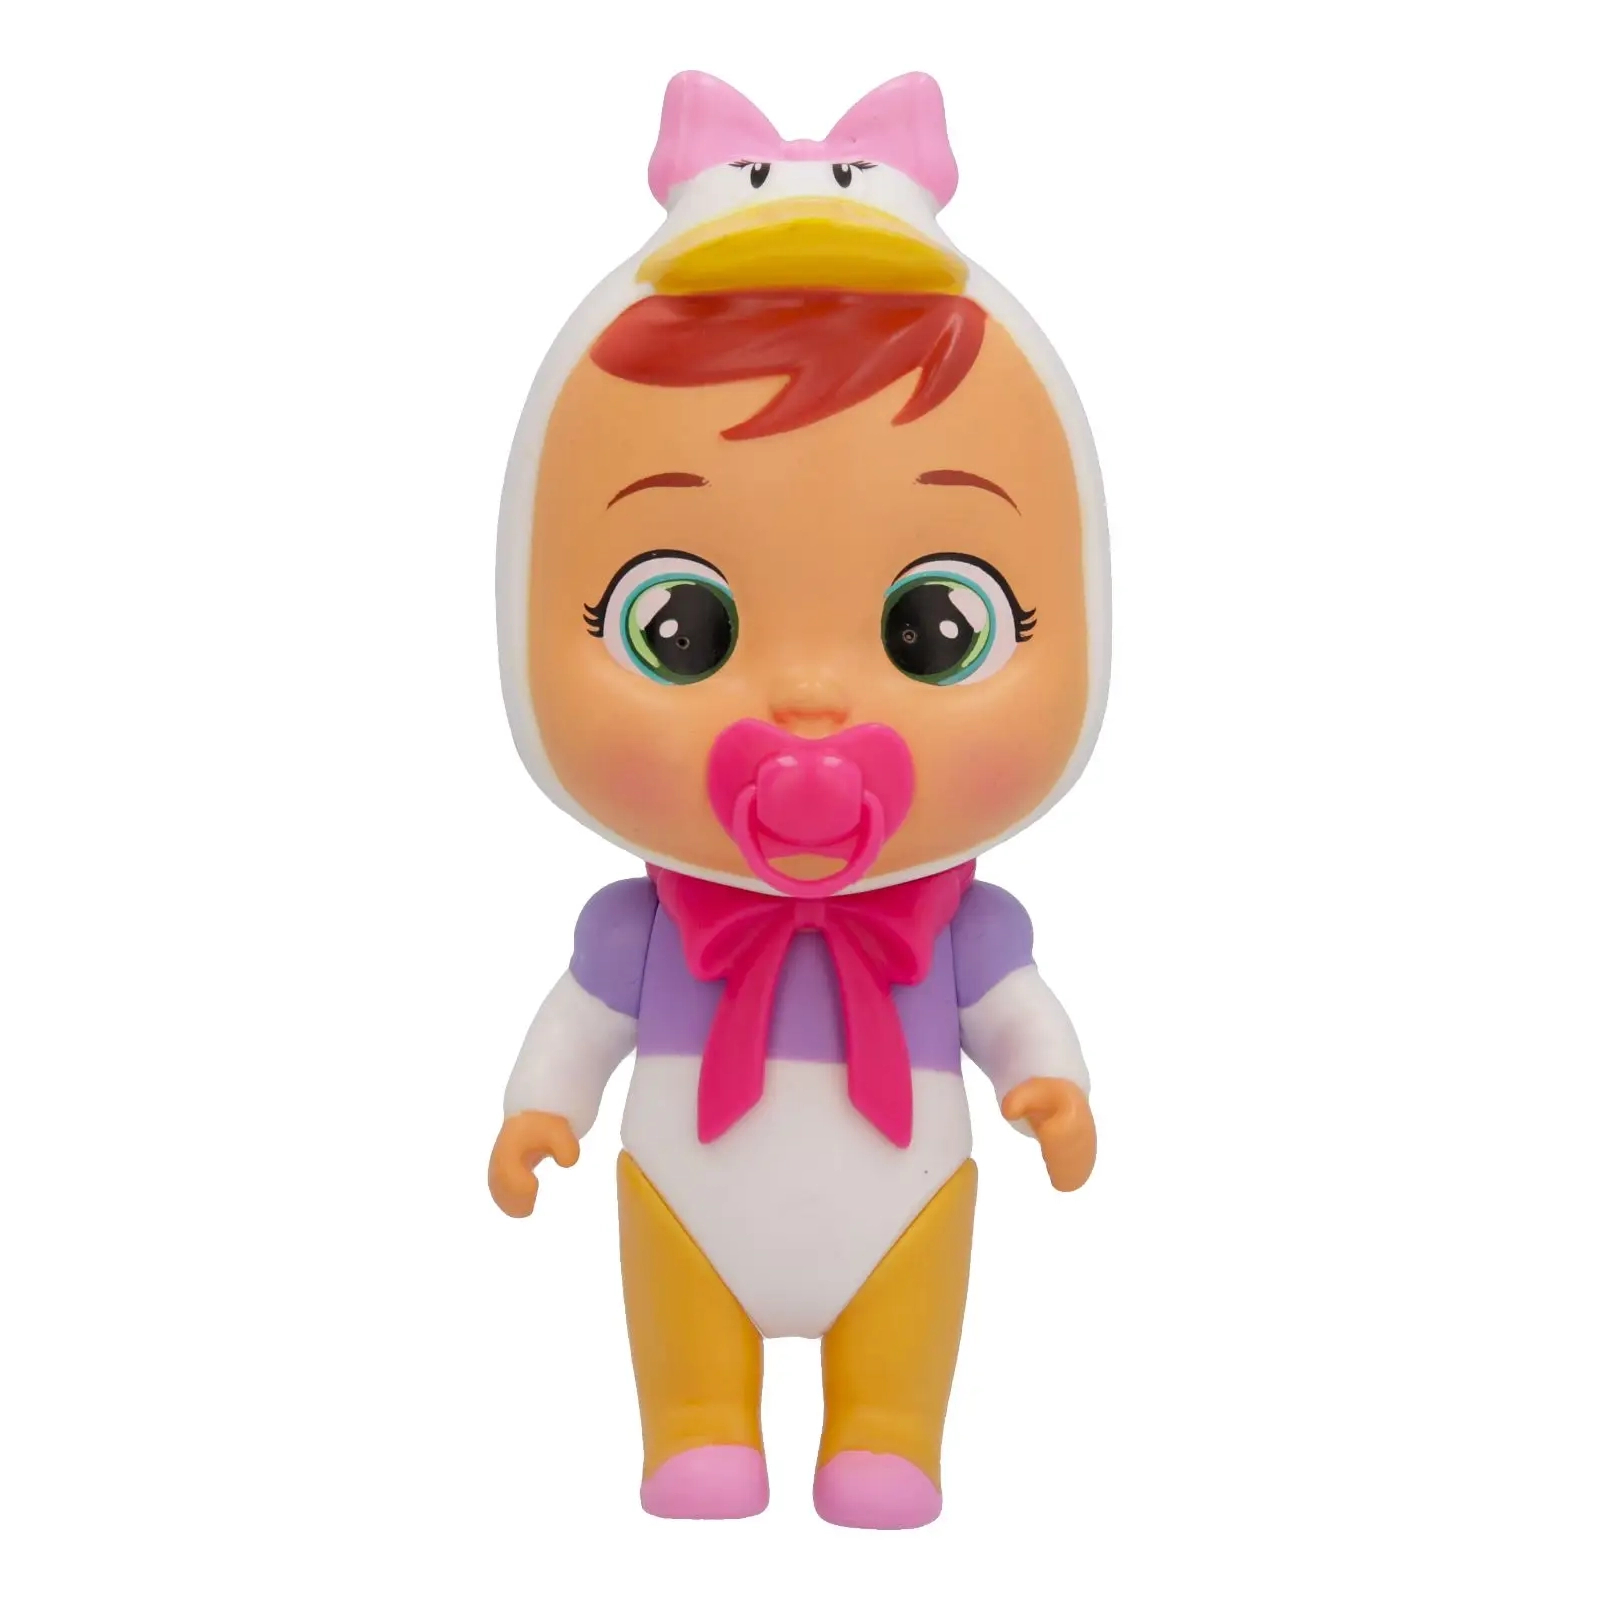 Кукла IMC Toys Cry Babies Magic Tears DISNEY EDITION (82663) изображение 8